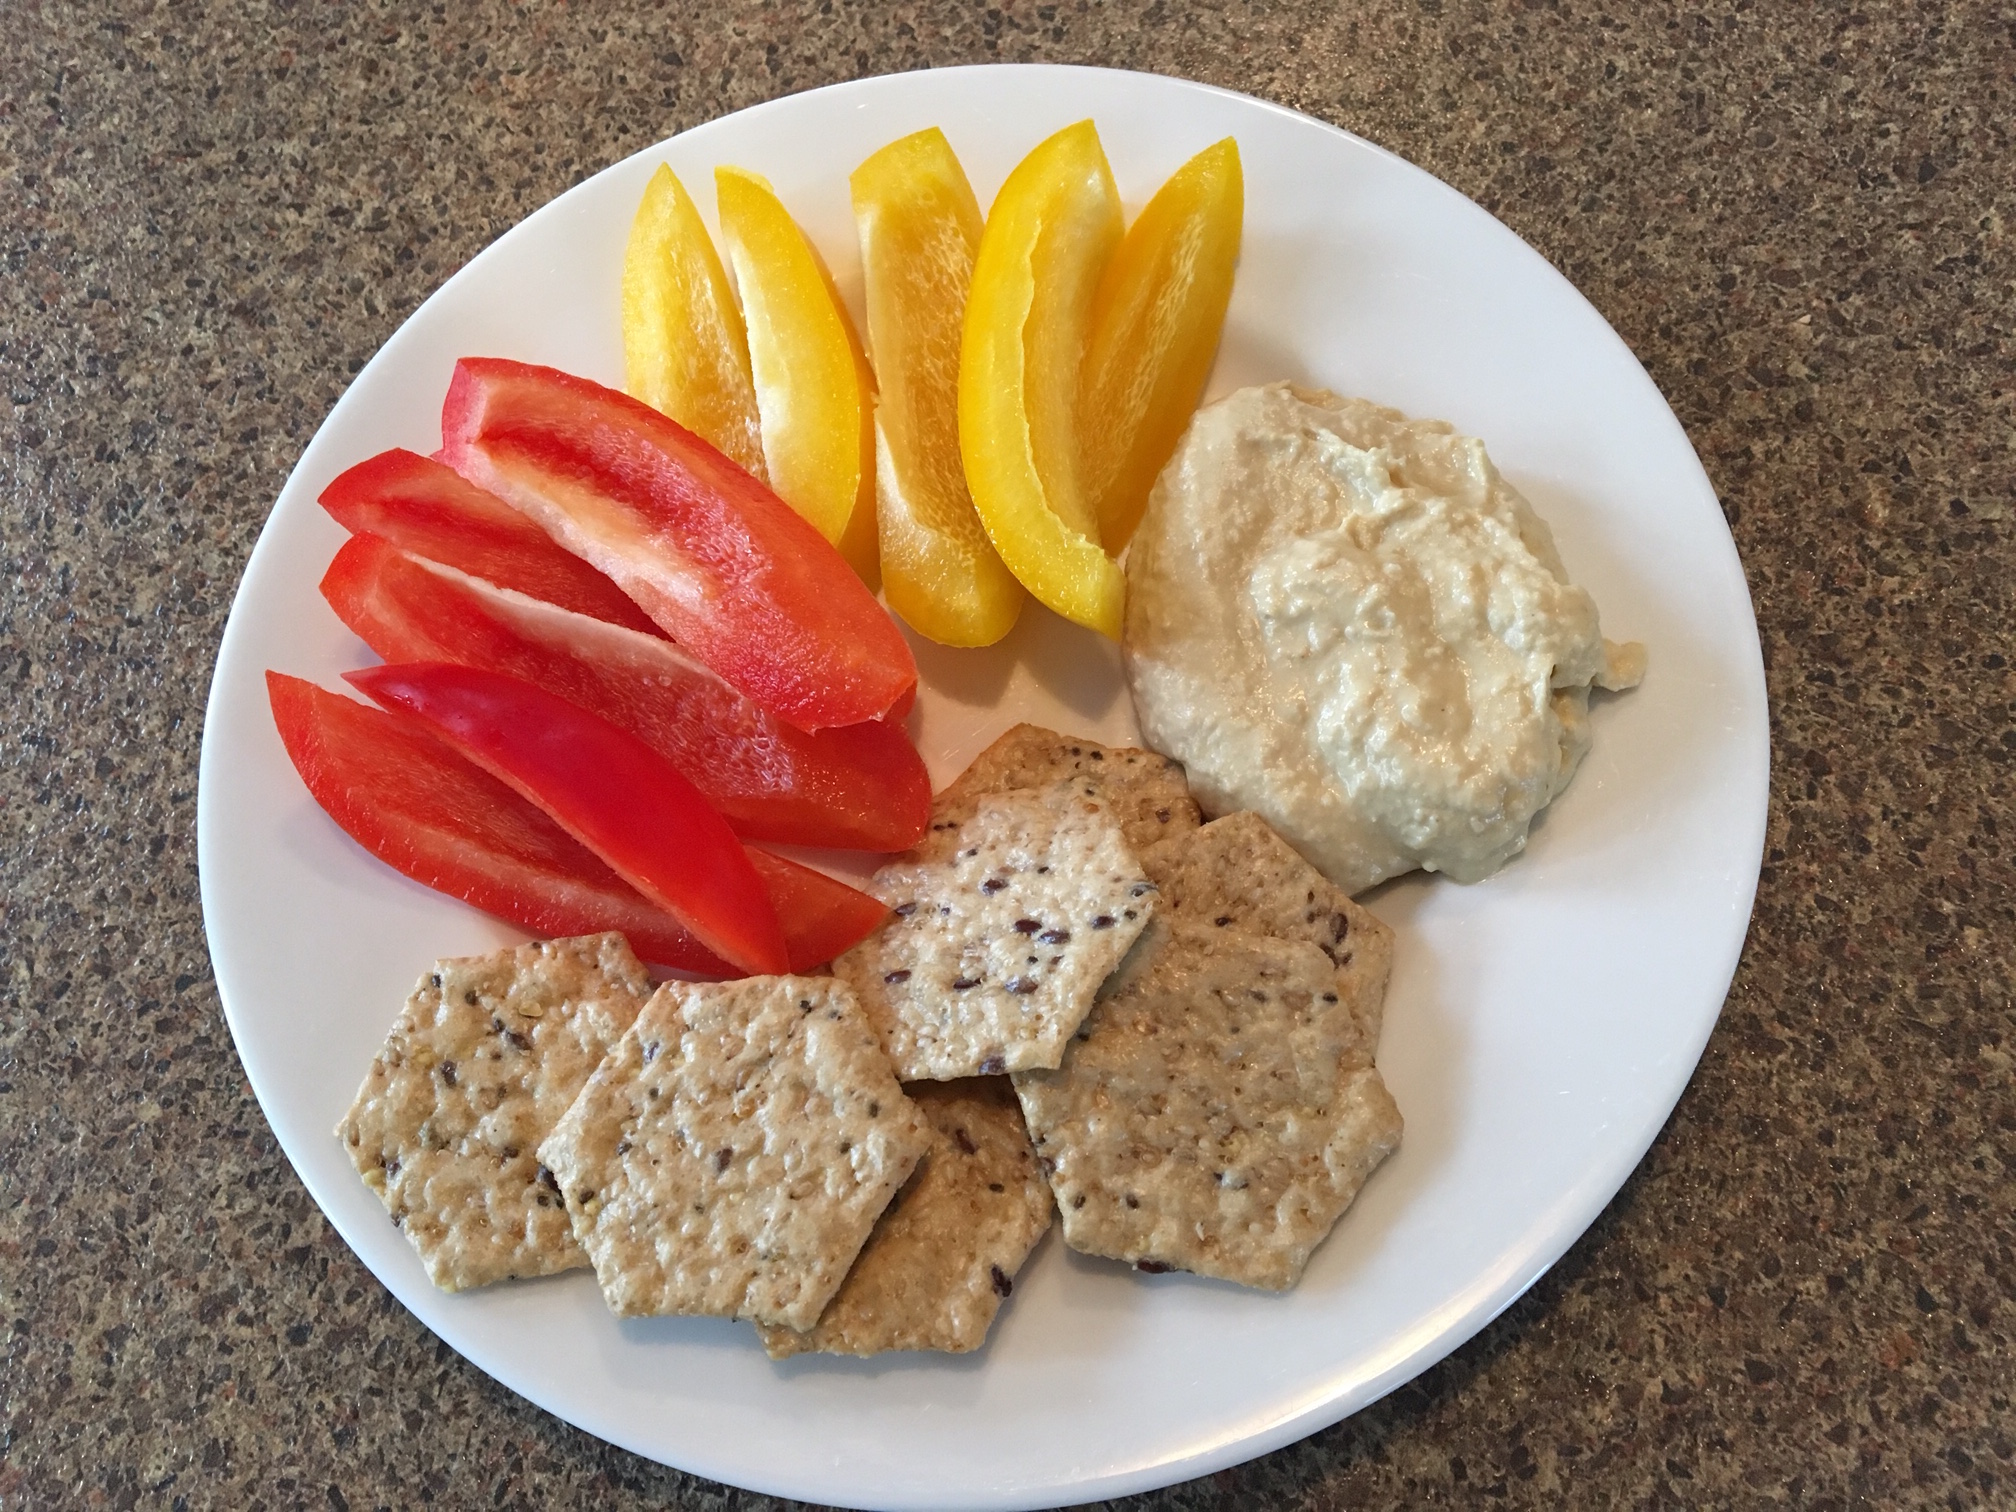 Hummus with veggies and crackers